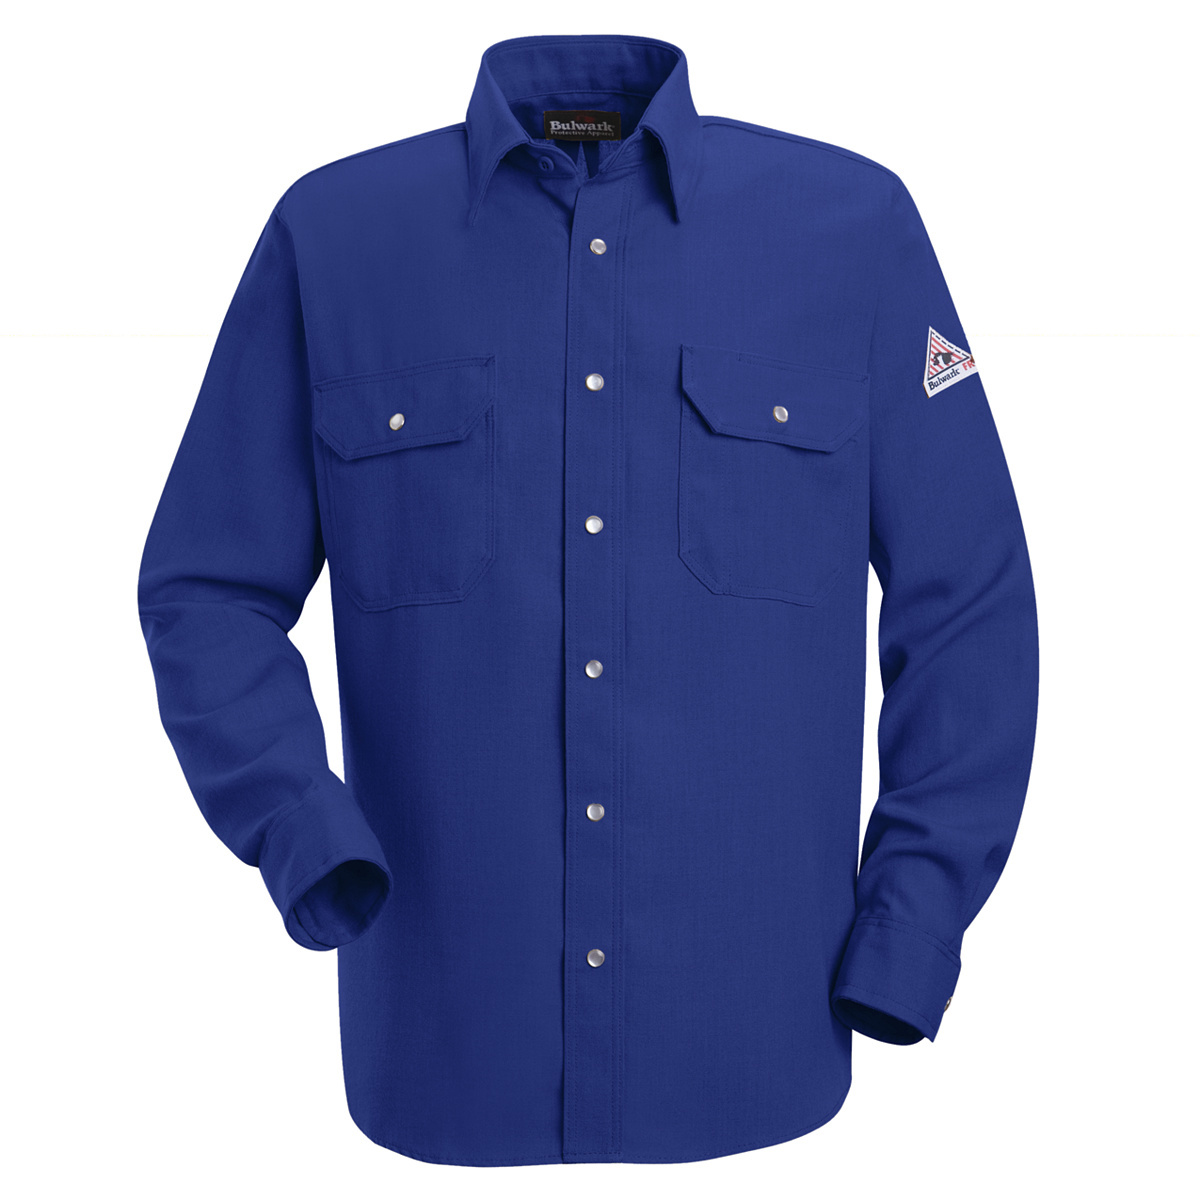 Bulwark® Large Tall Royal Blue Nomex® IIIA/Nomex® Aramid/Kevlar® Aramid Flame Resistant Uniform Shirt With Snap Front Closure